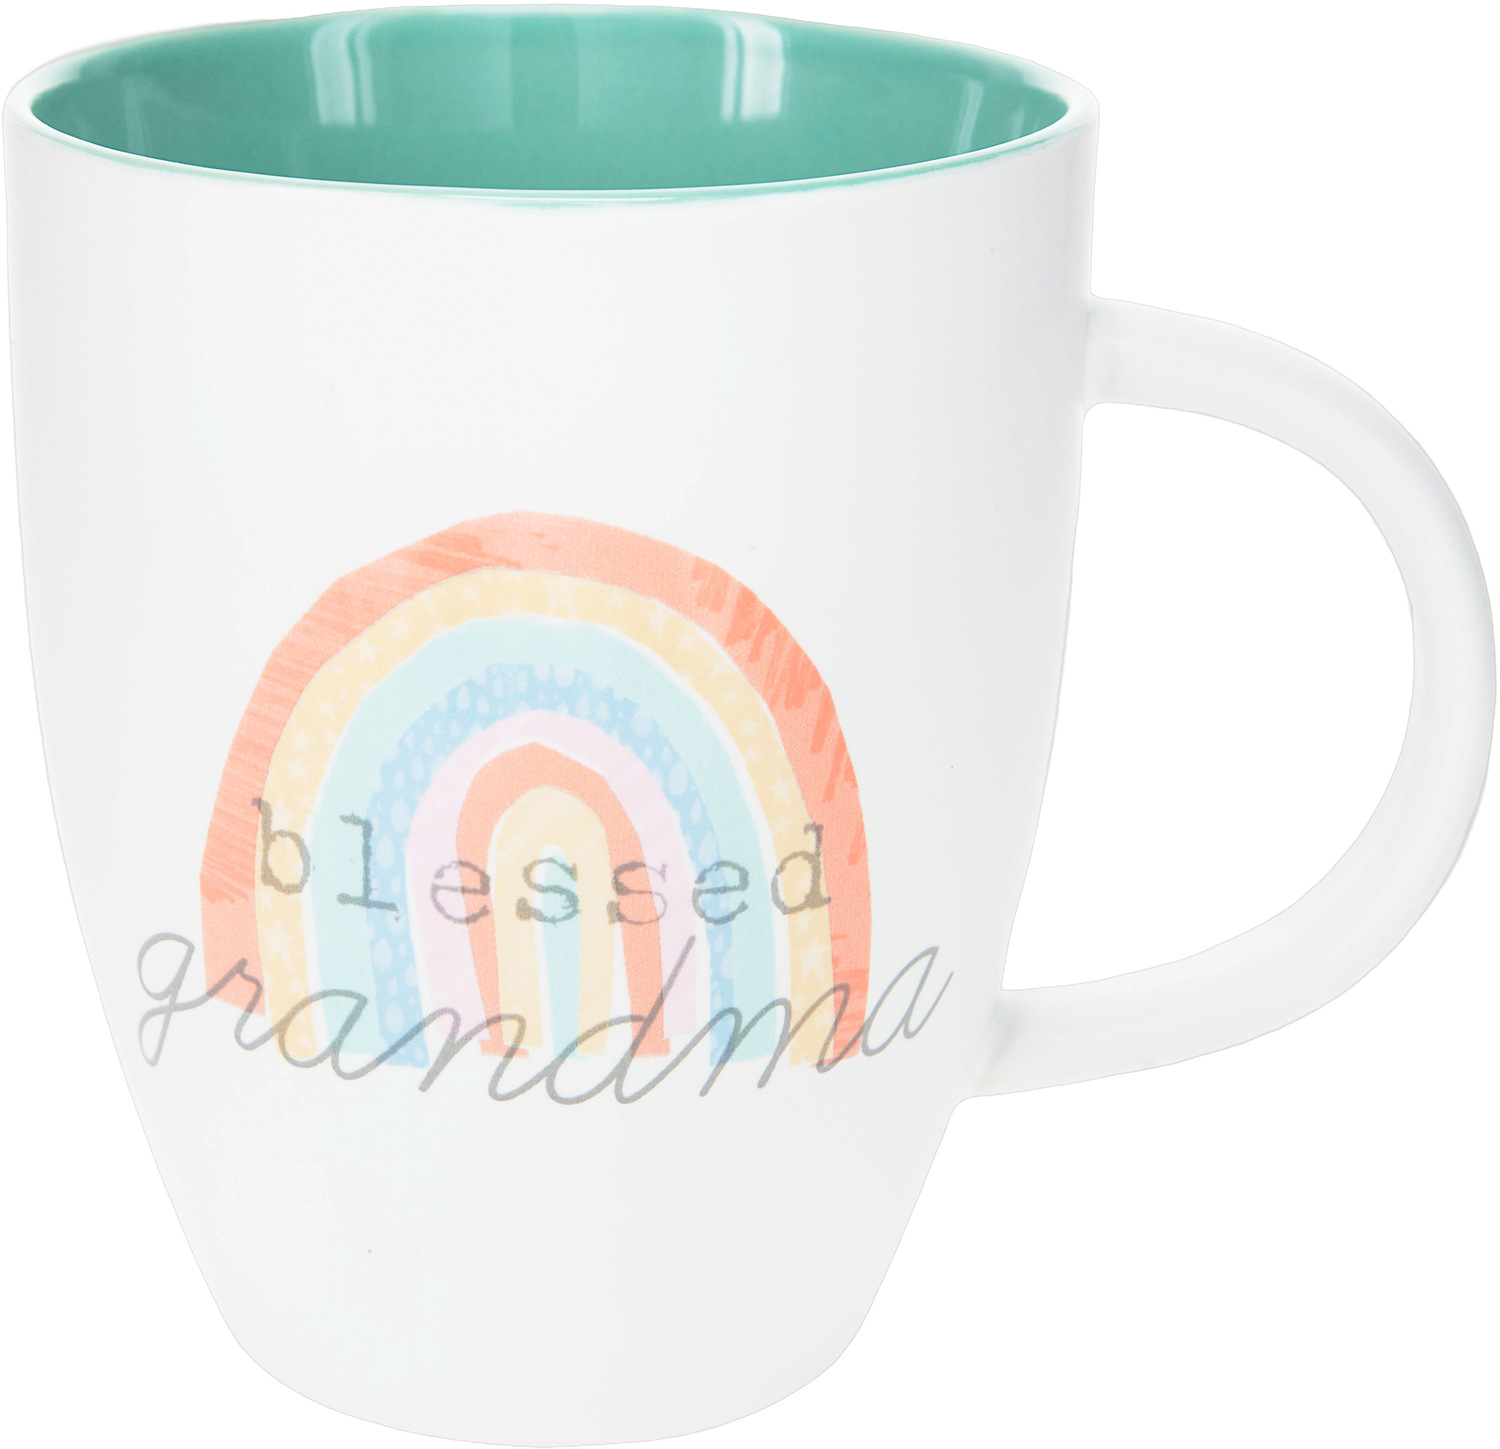 Blessed Grandma by Sunshine & Rainbows - Blessed Grandma - 20 oz Cup